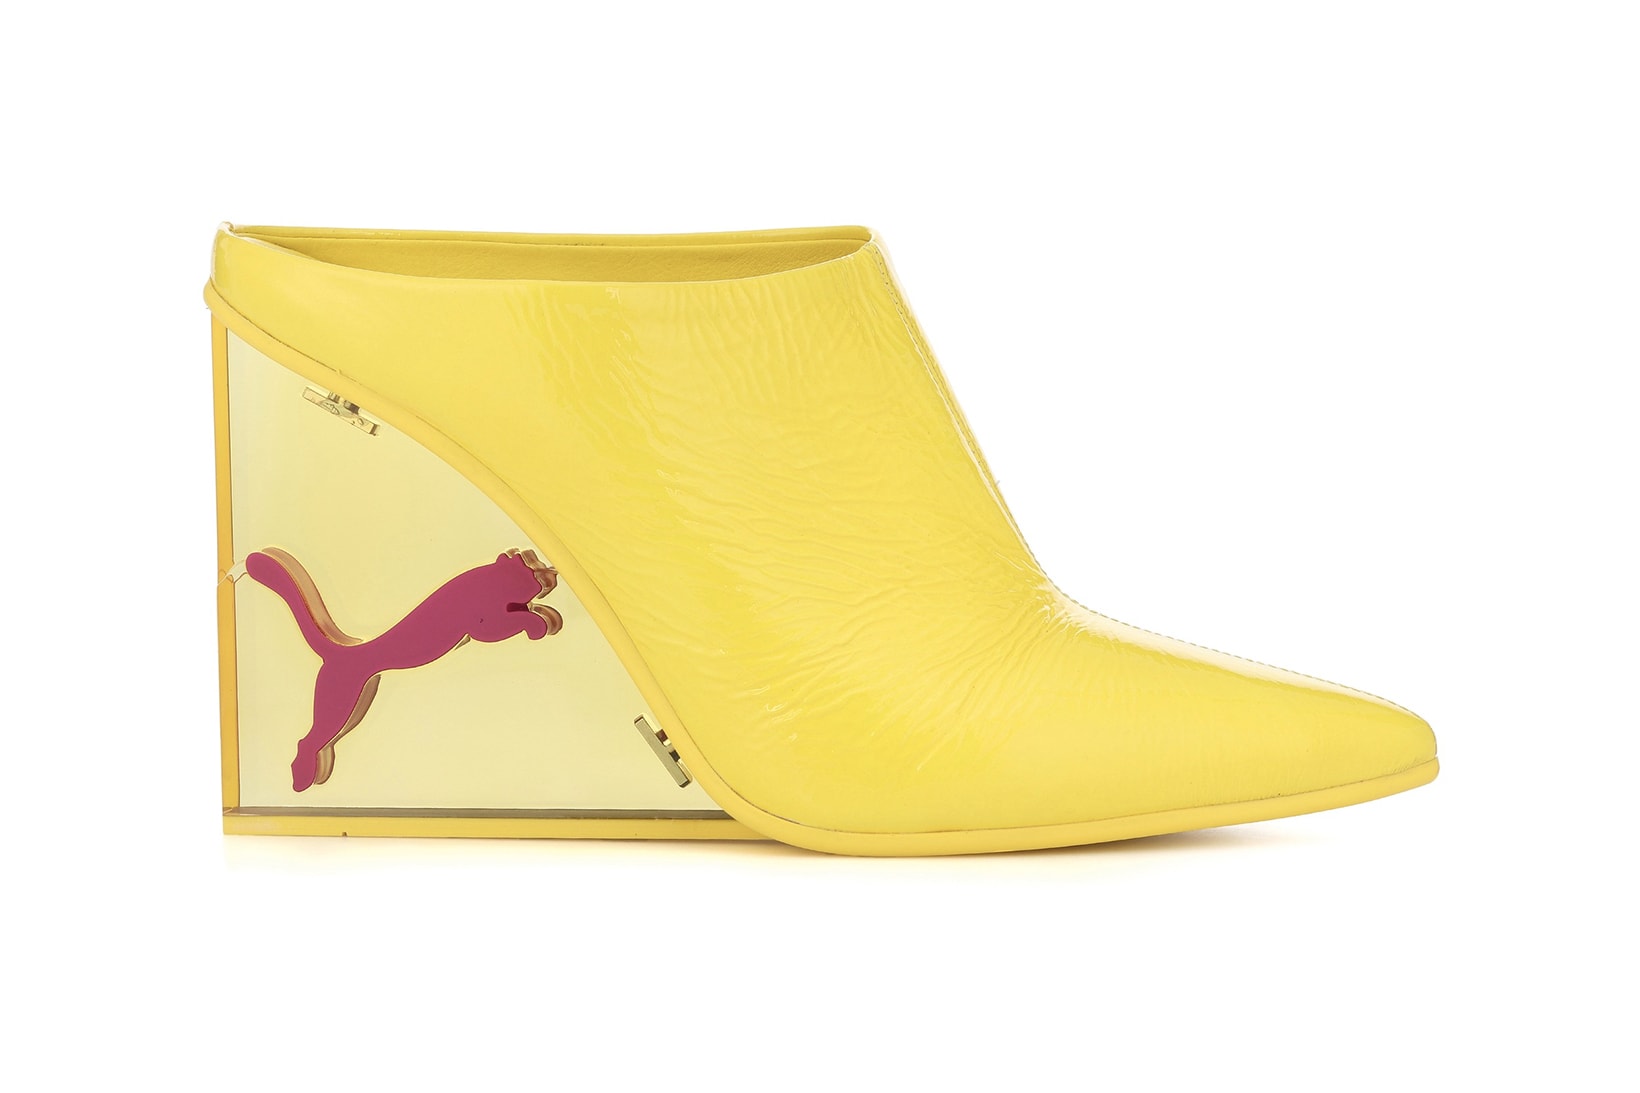 Fenty PUMA Rihanna Yellow Perspex Heel Mules Sandals